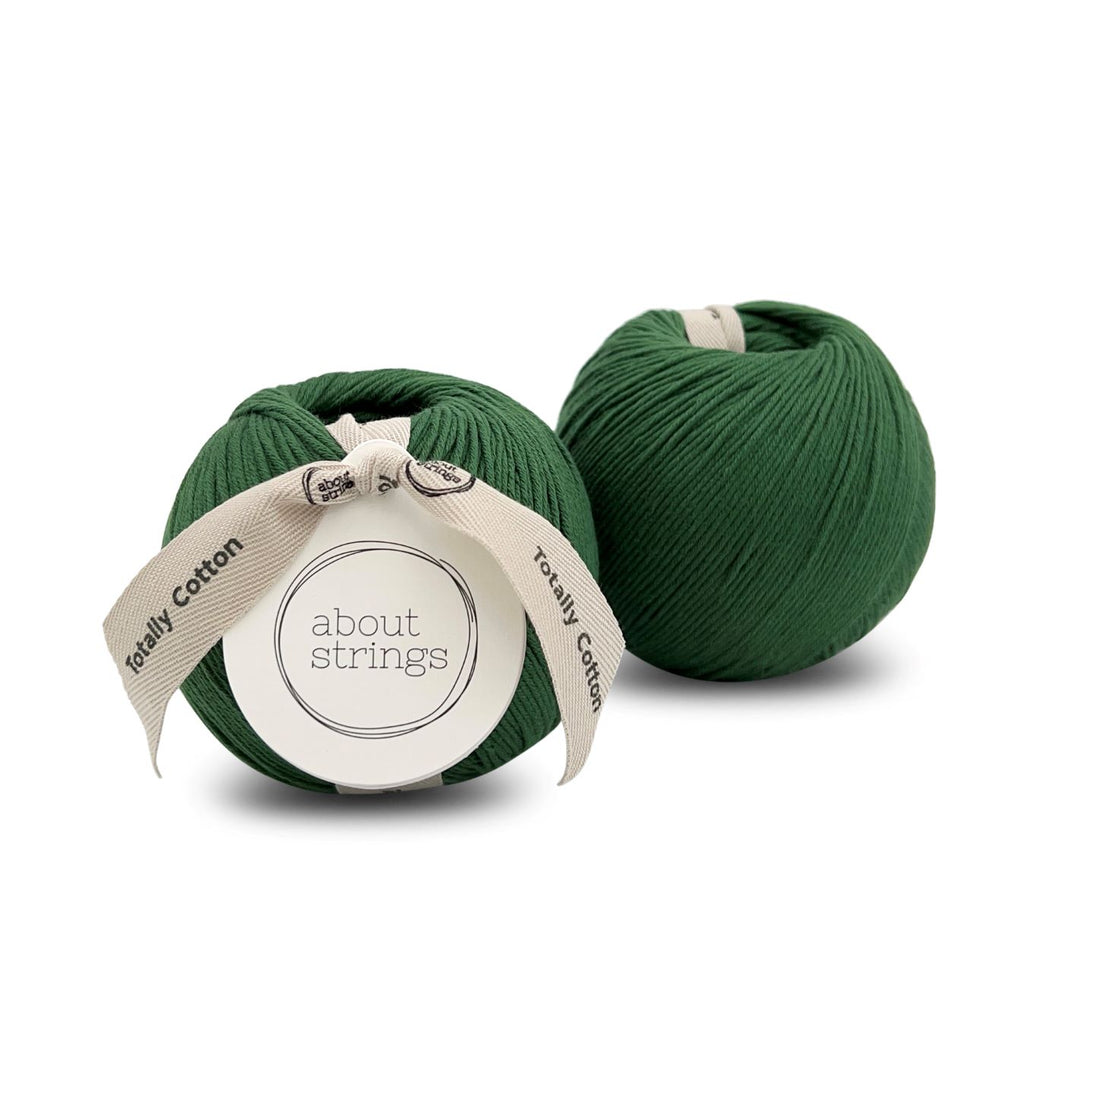 About Strings Yarn - Organic Cotton Yarn